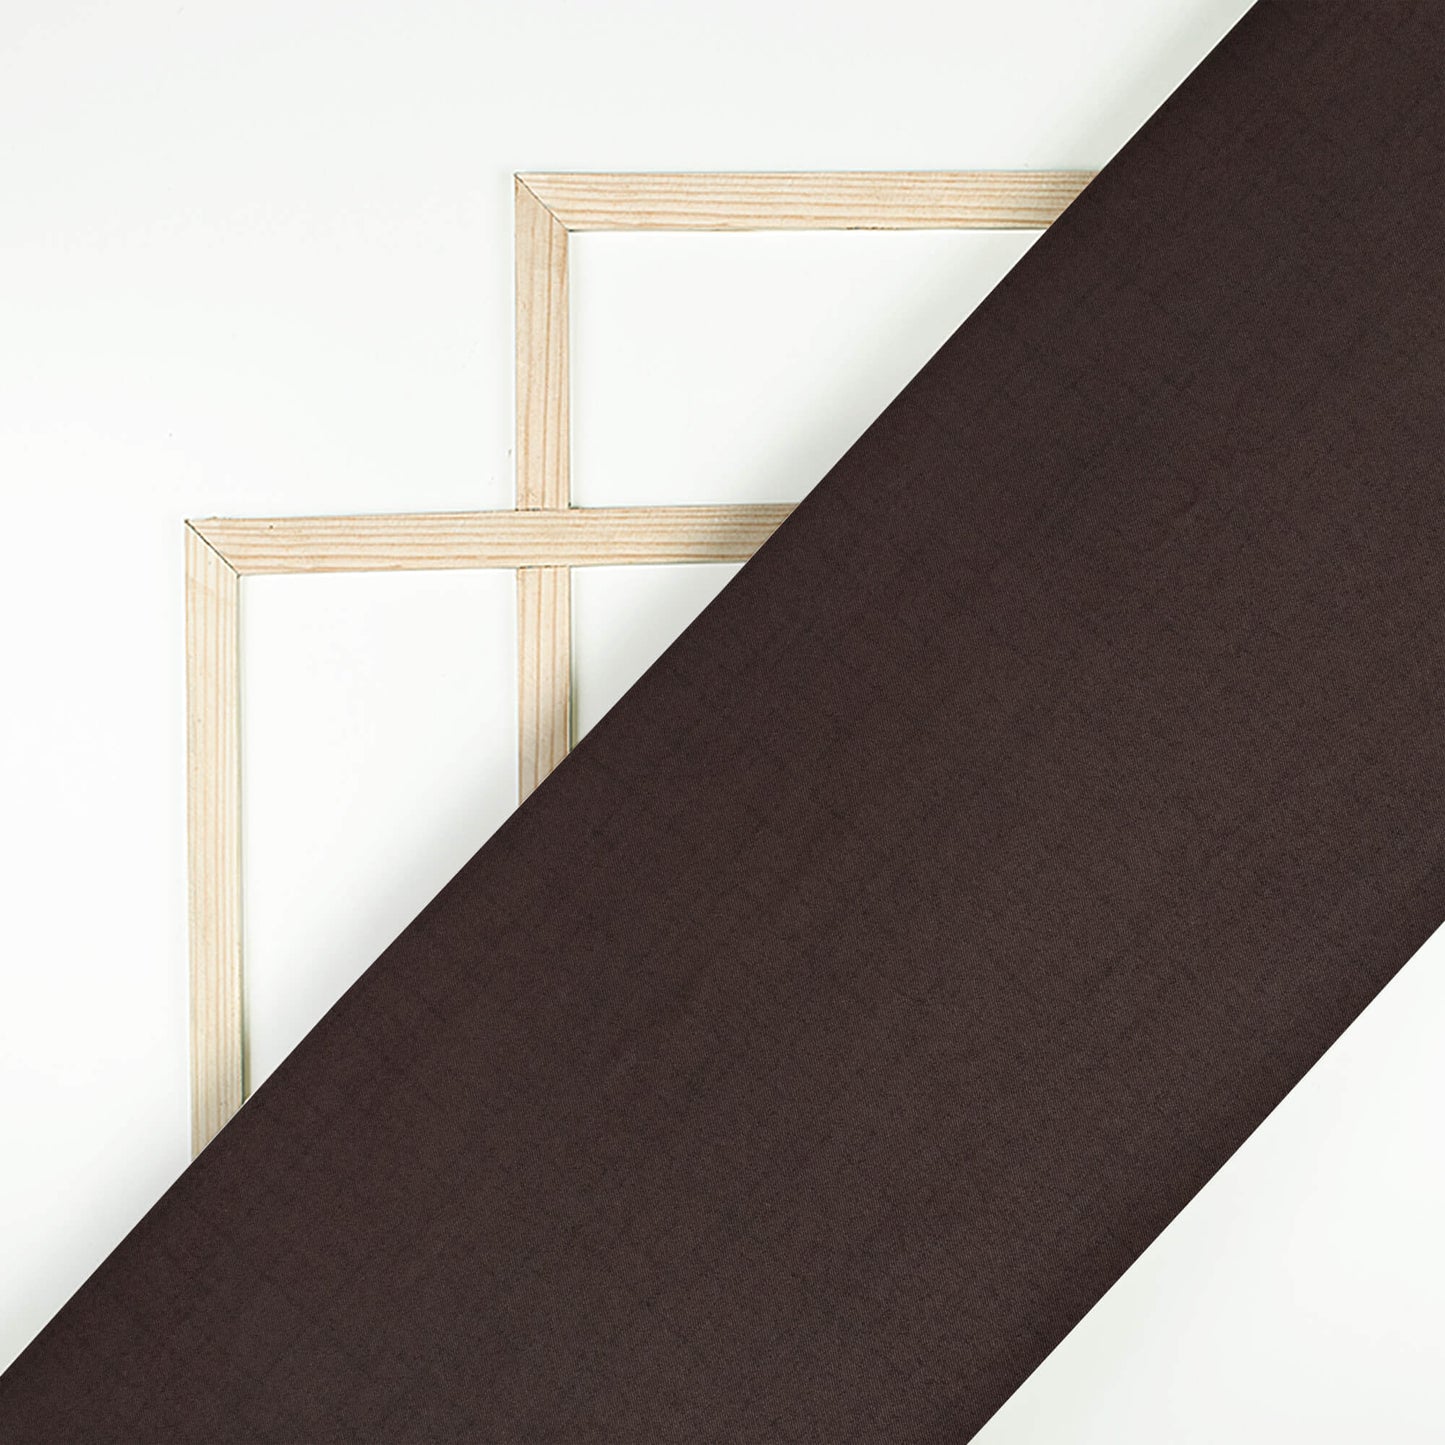 Dark Brown Checks Printed Luxury Suiting Fabric